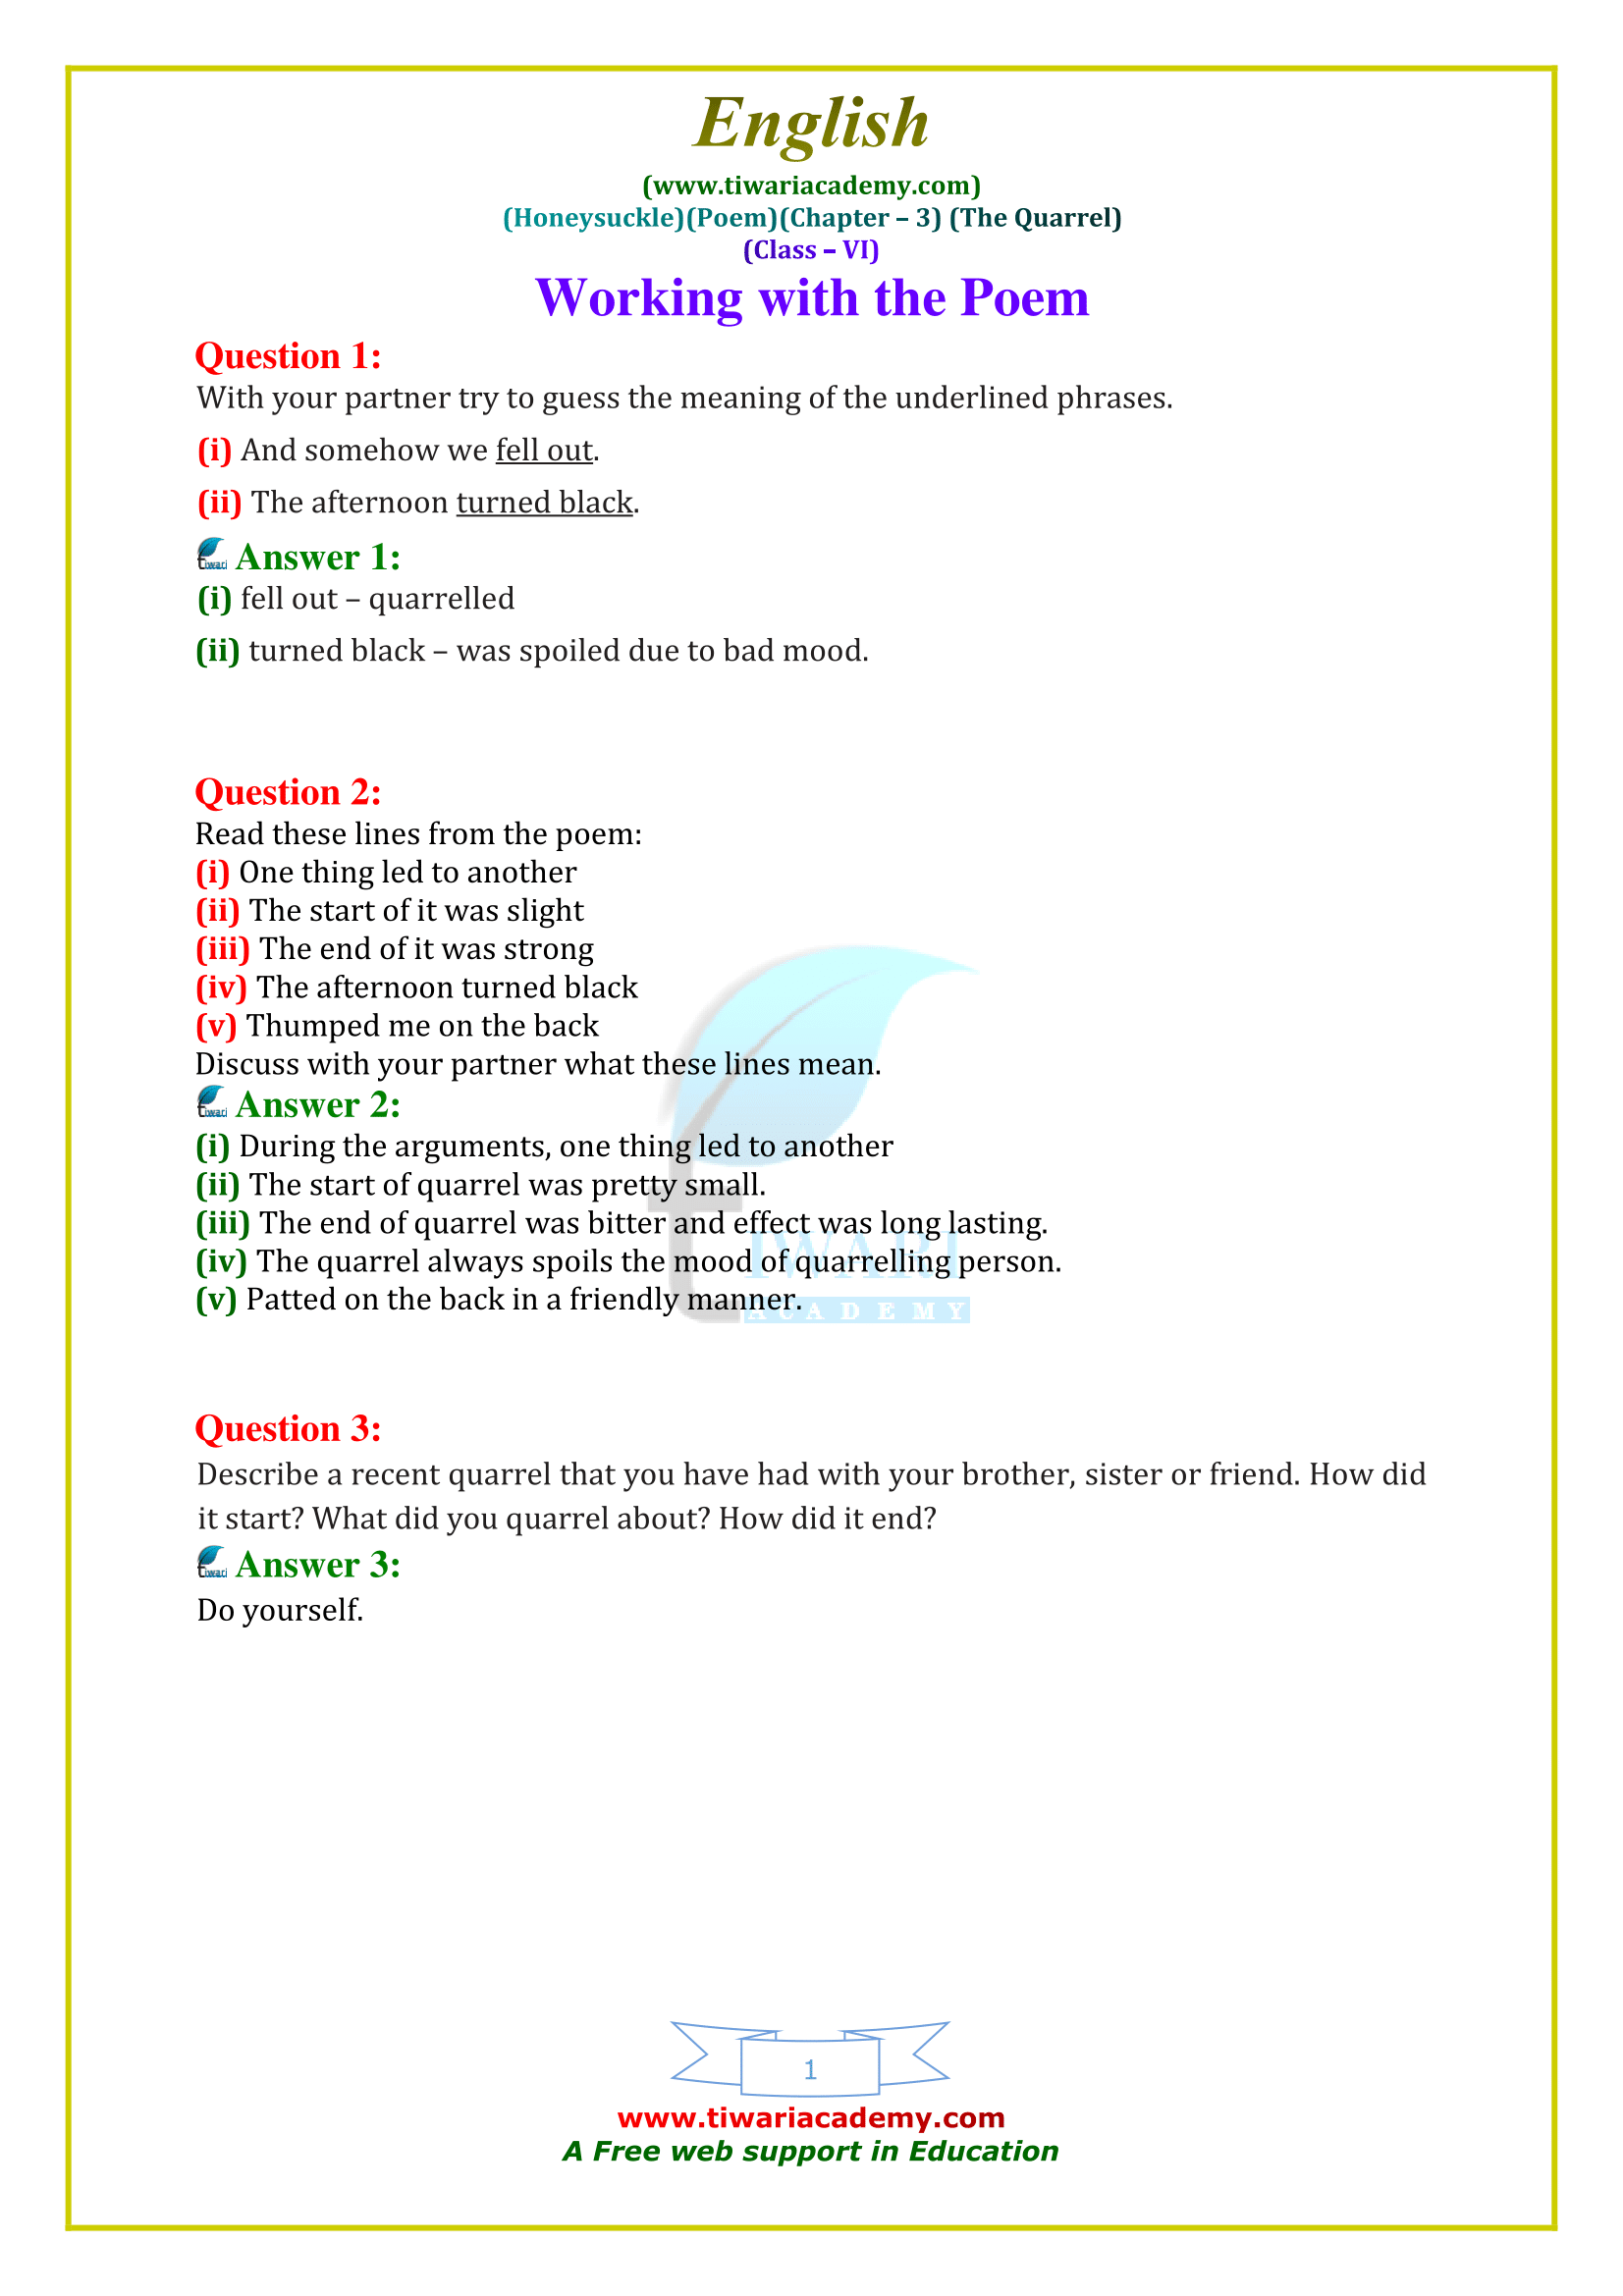 NCERT Solutions for Class 6 English Honeysuckle Poem 3 The Quarrel